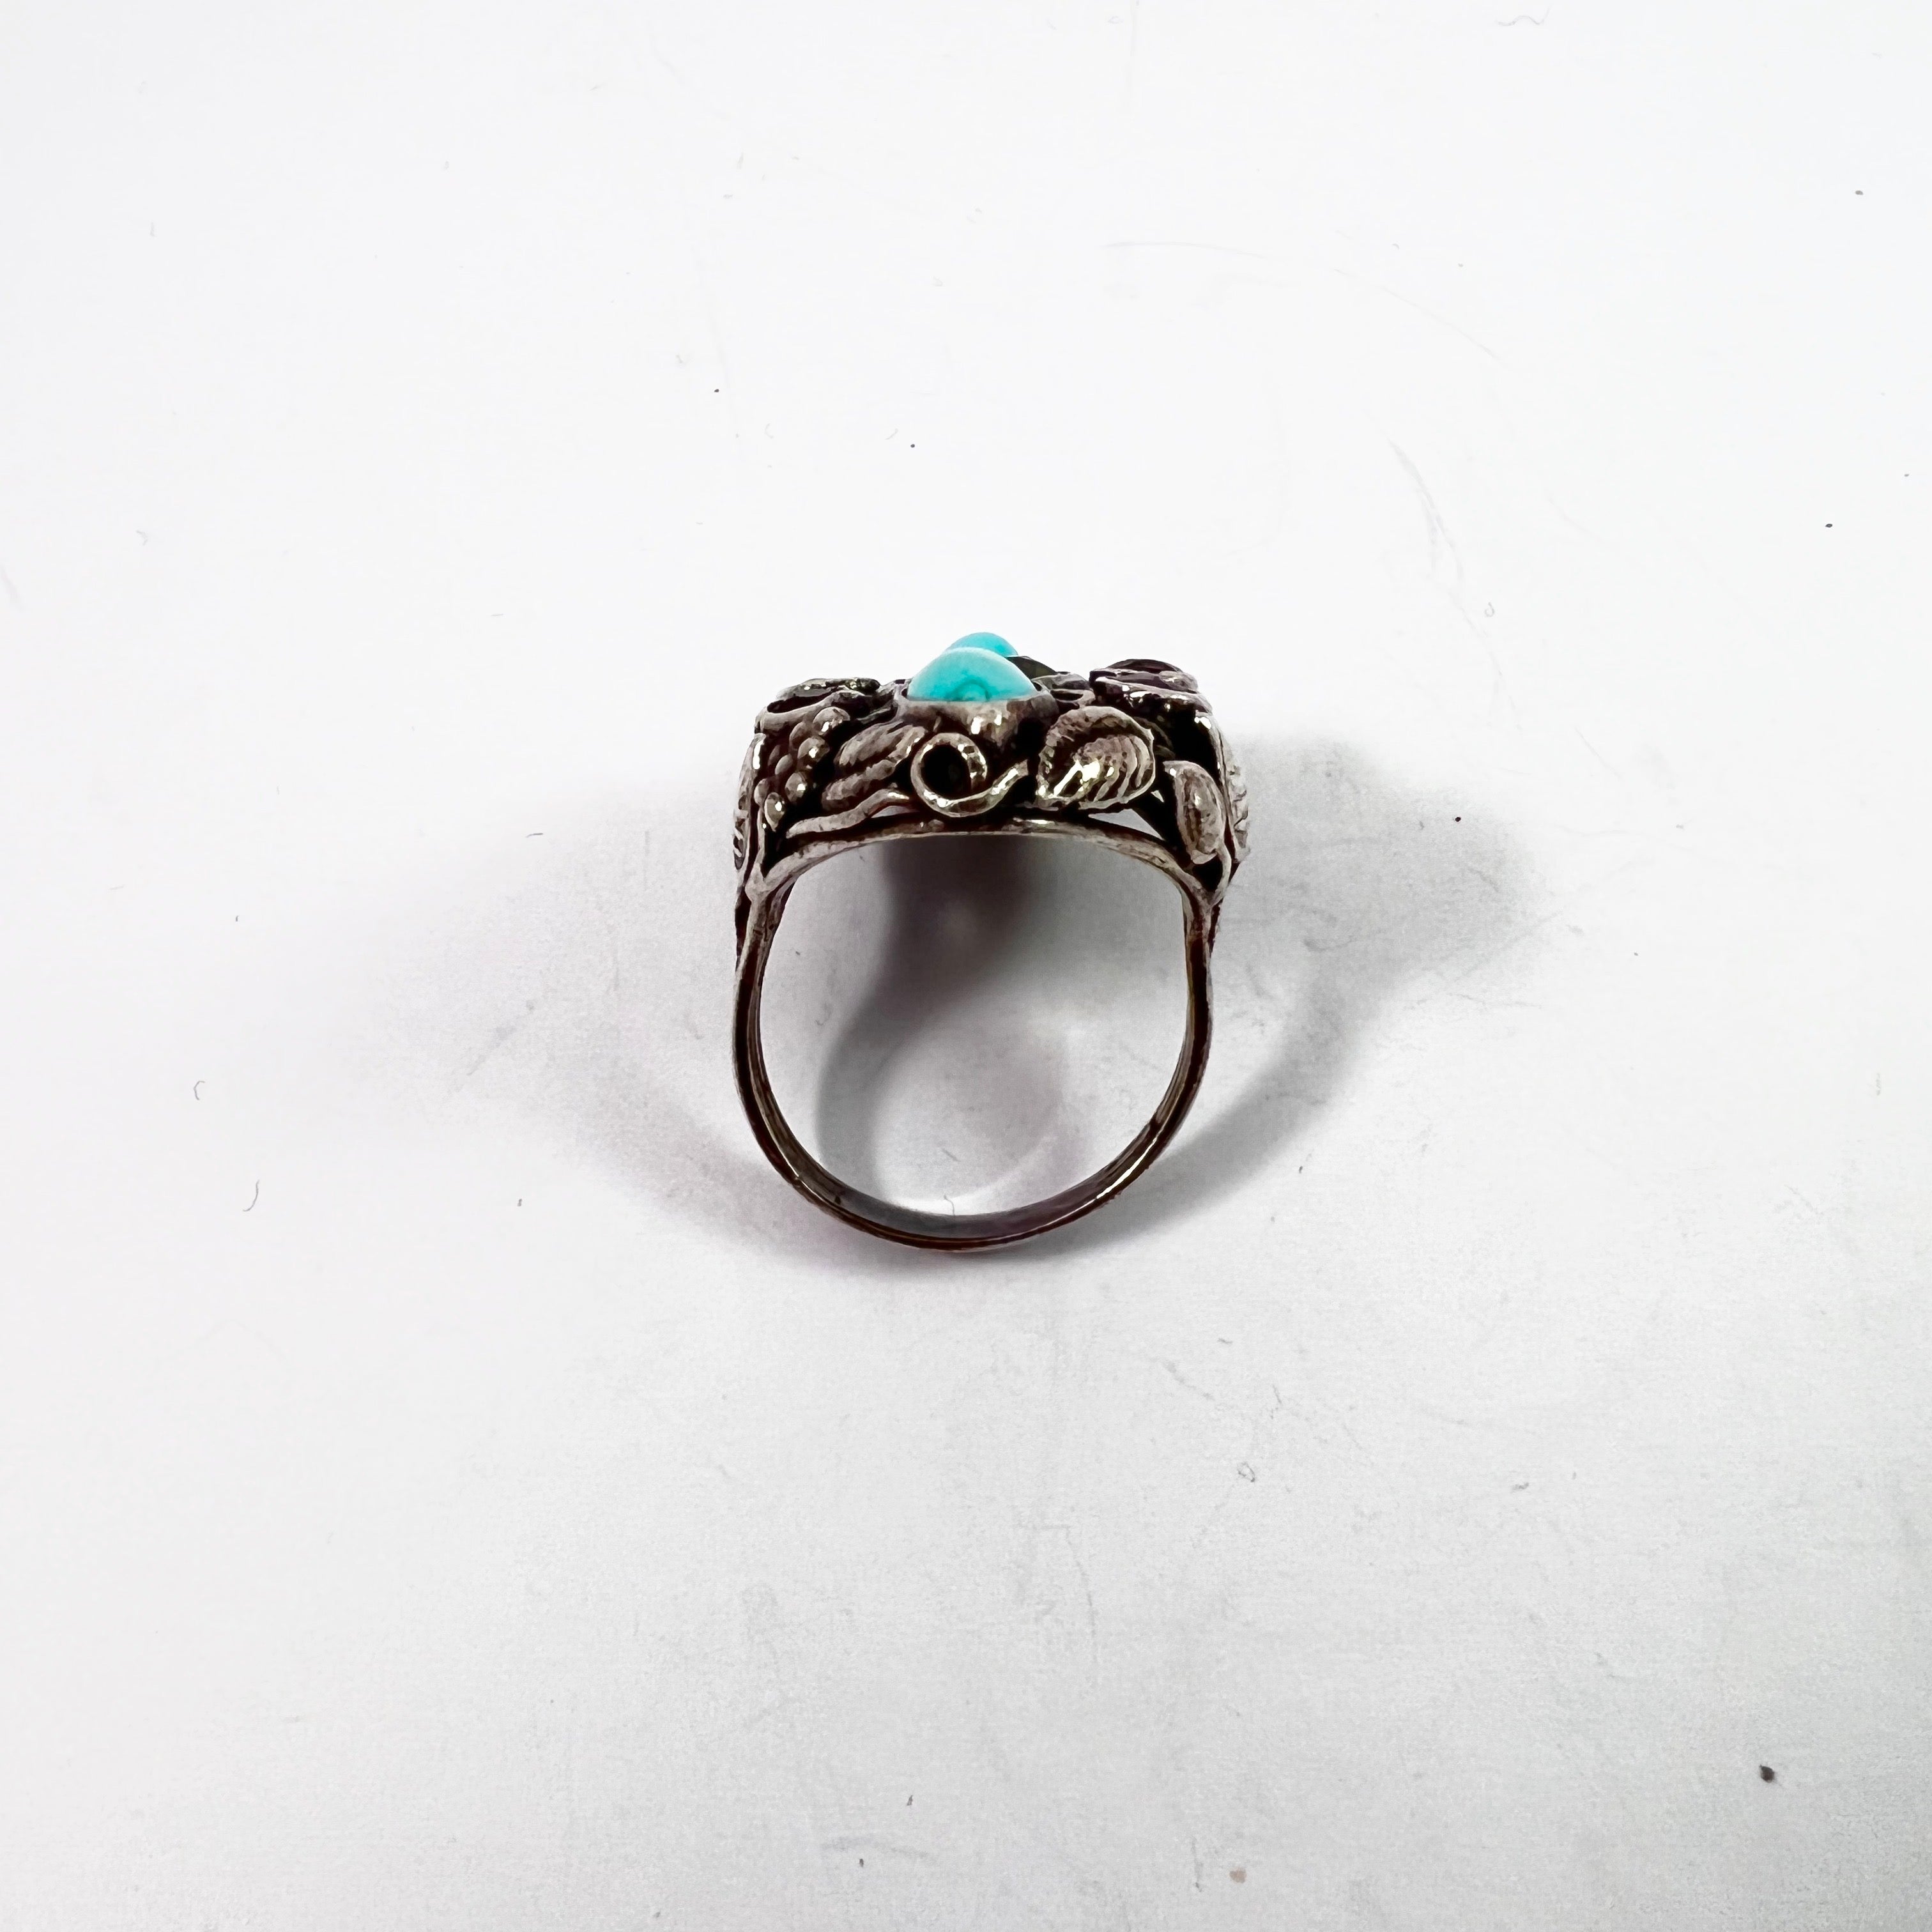 Antique Arts & Crafts Era Sterling Silver Turquoise Quartz Ring.